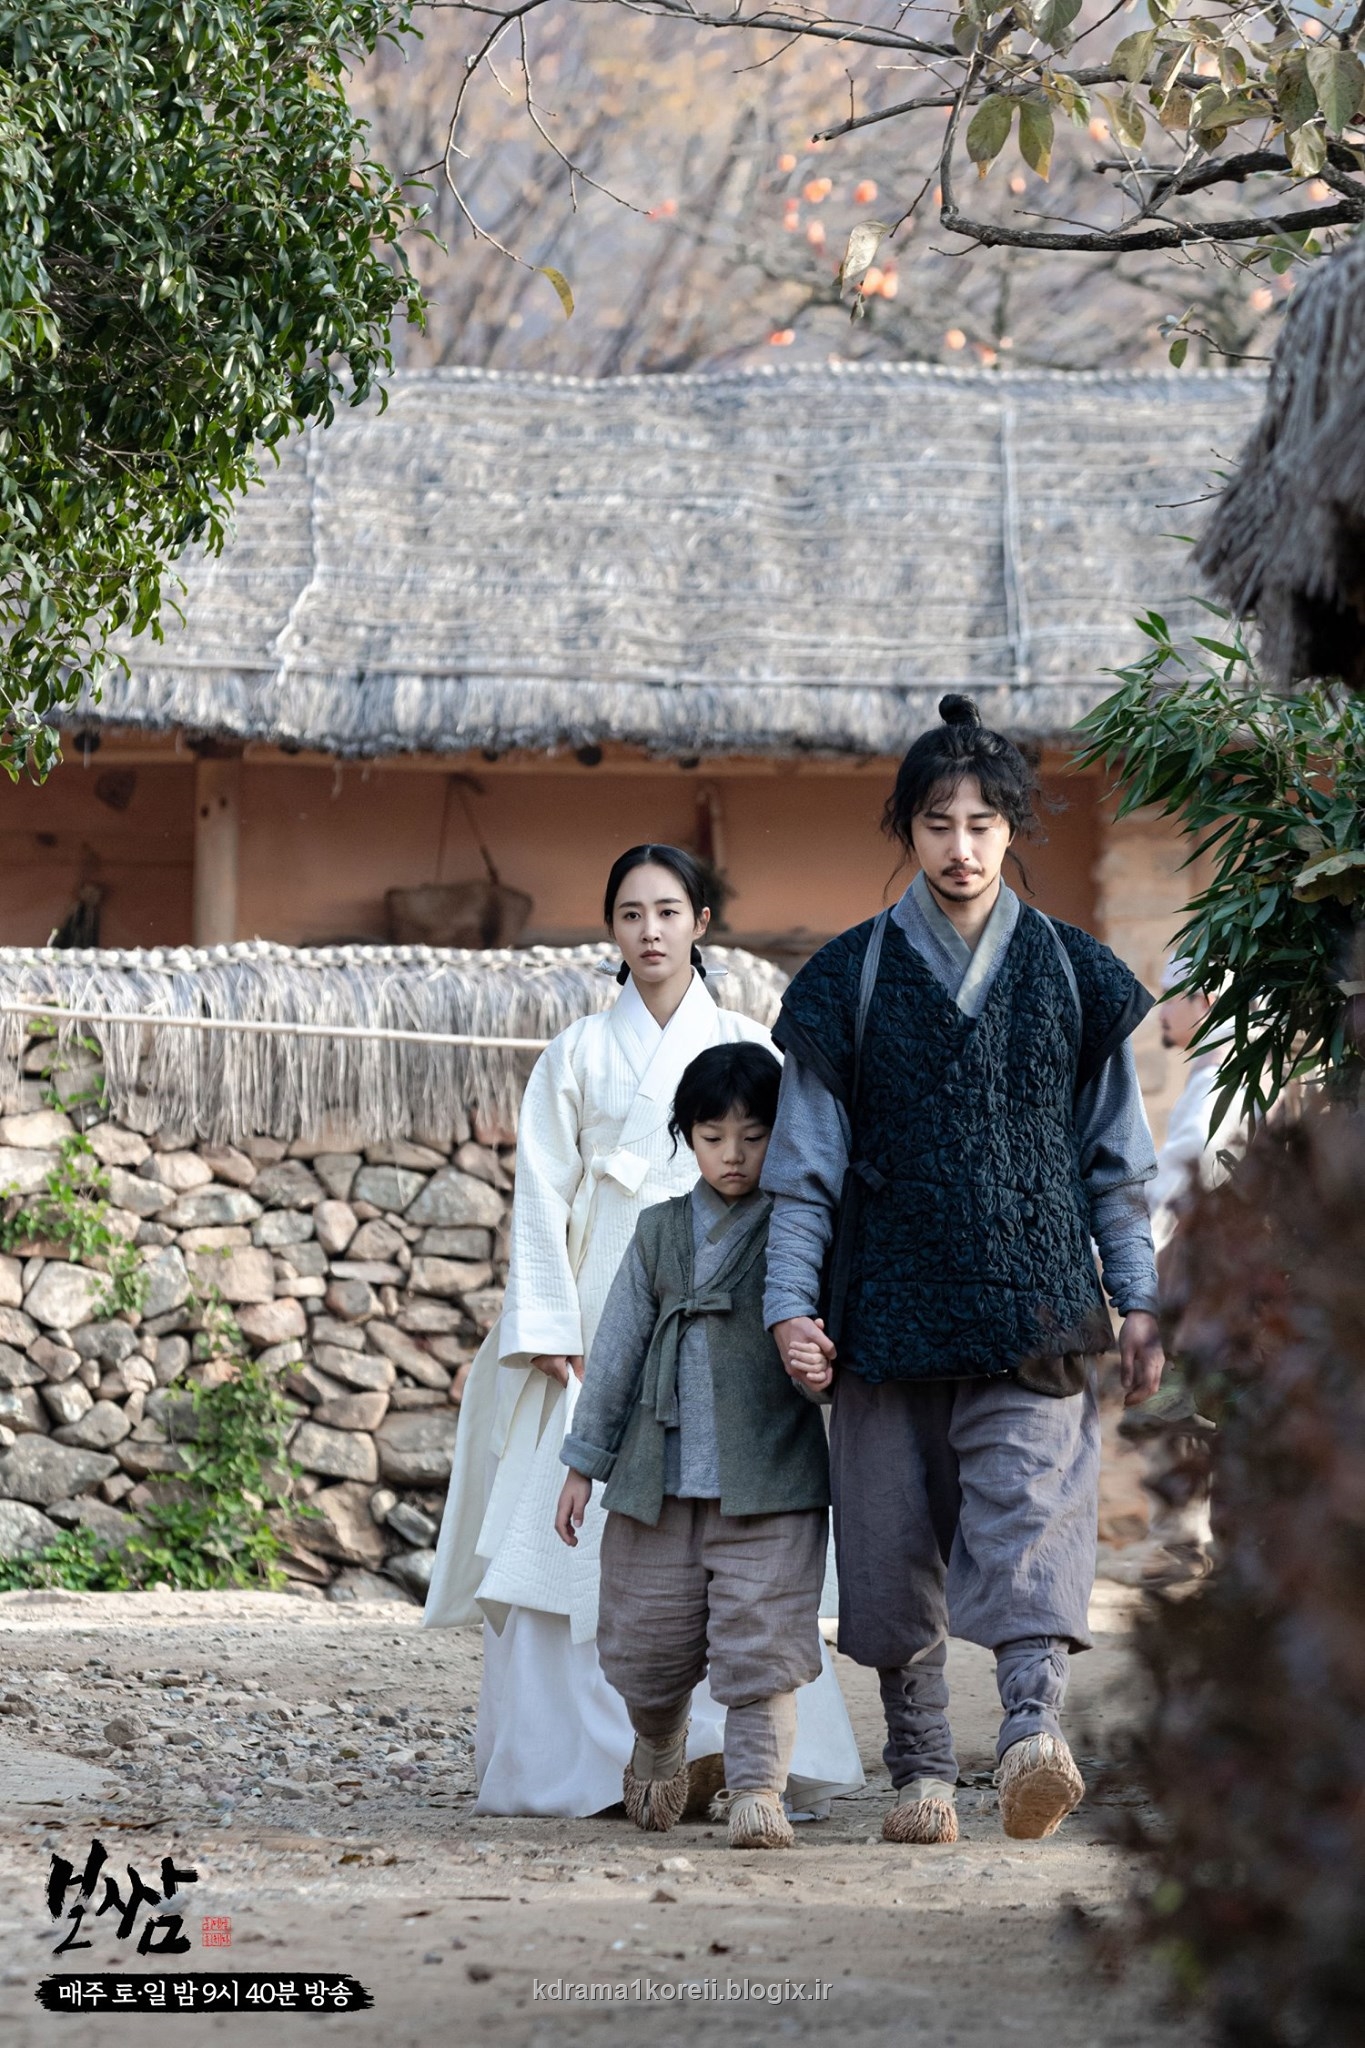 نقد سریال کره ای تاریخی عاشقانه